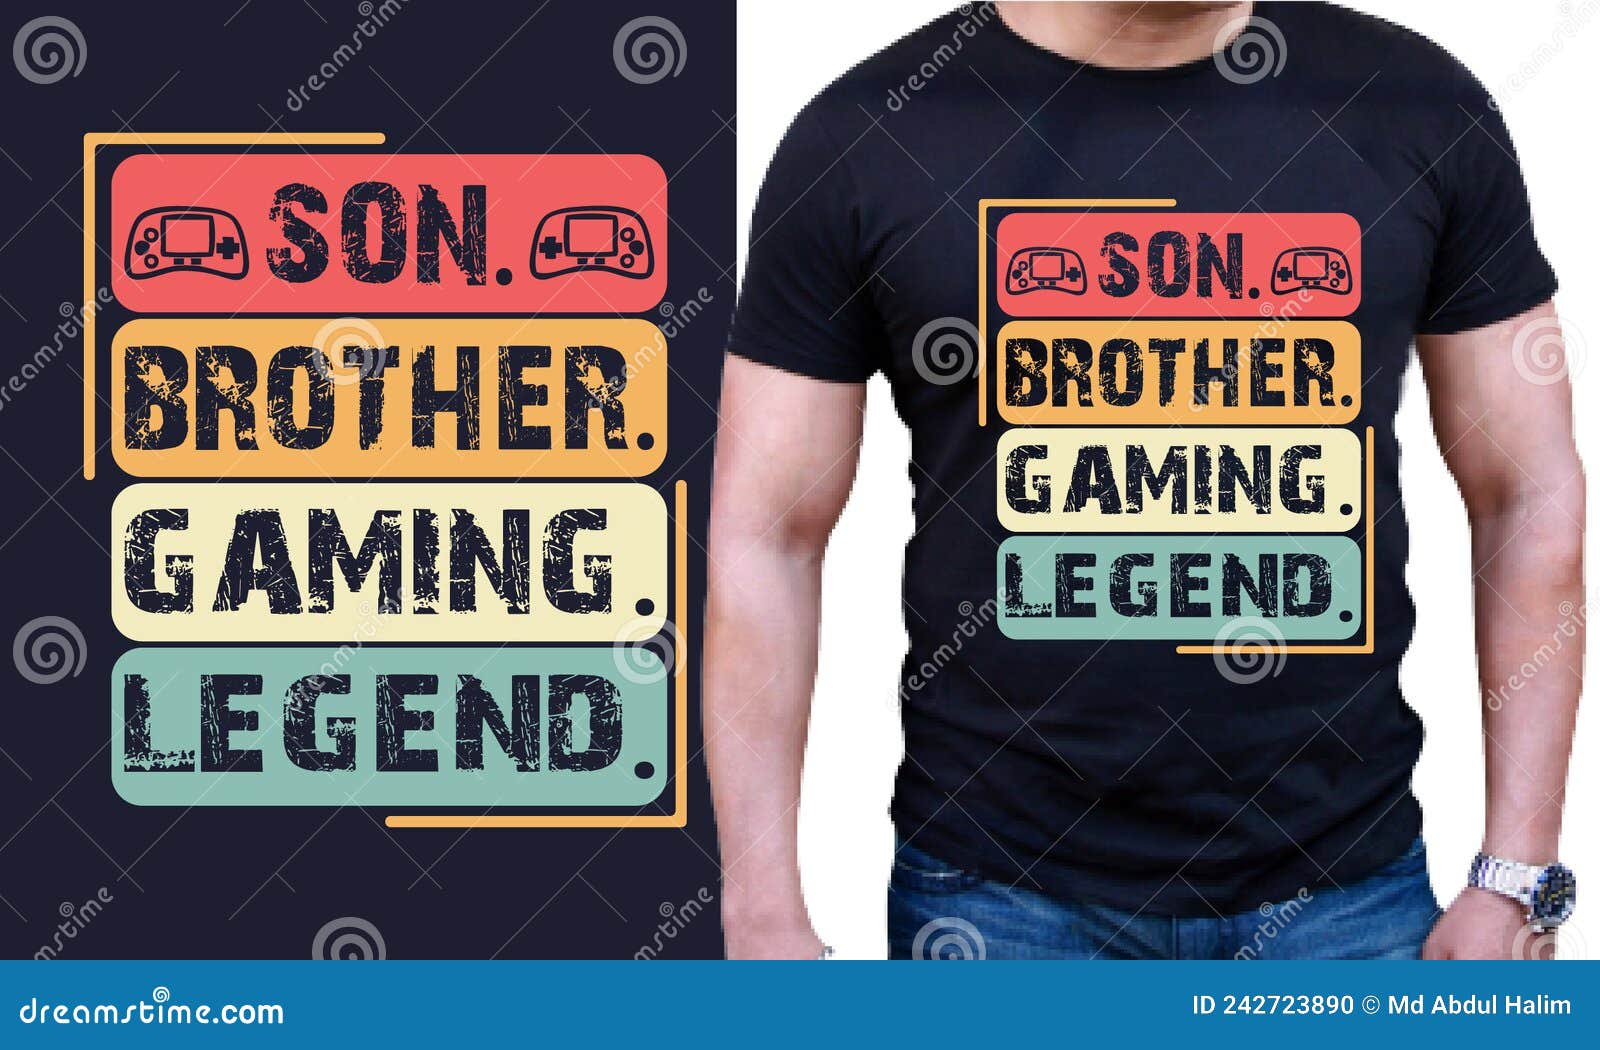 son brother gaming legend =custom t-shirt